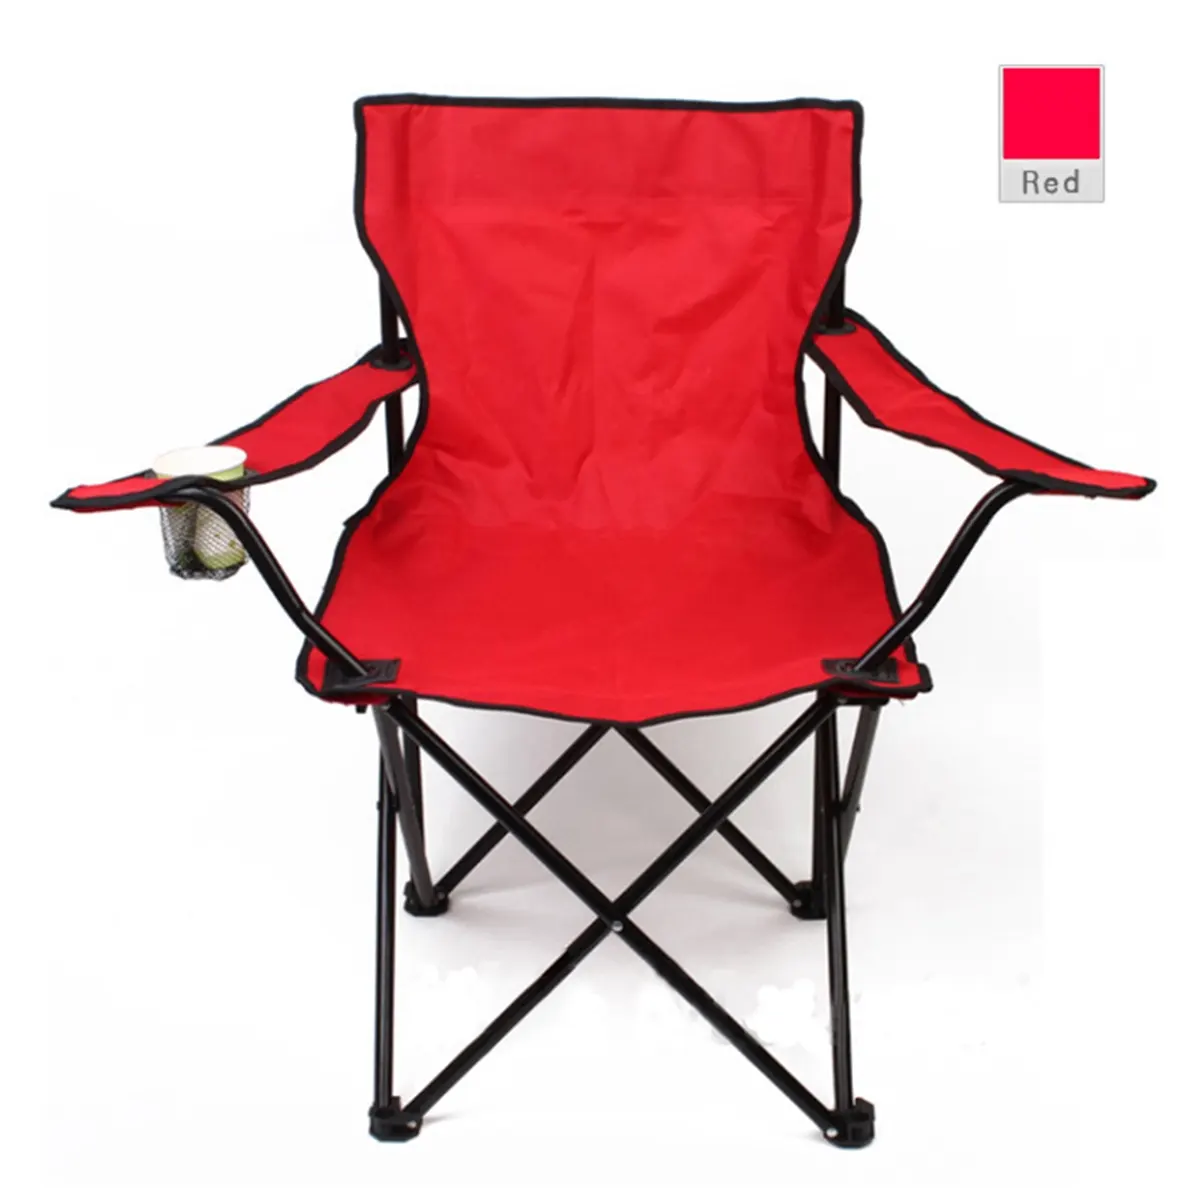 Silla de playa ligera para acampar en el mar, silla plegable de acero al aire libre, barata, oxford-poliéster, cubierta negra XL 1, OEM chile